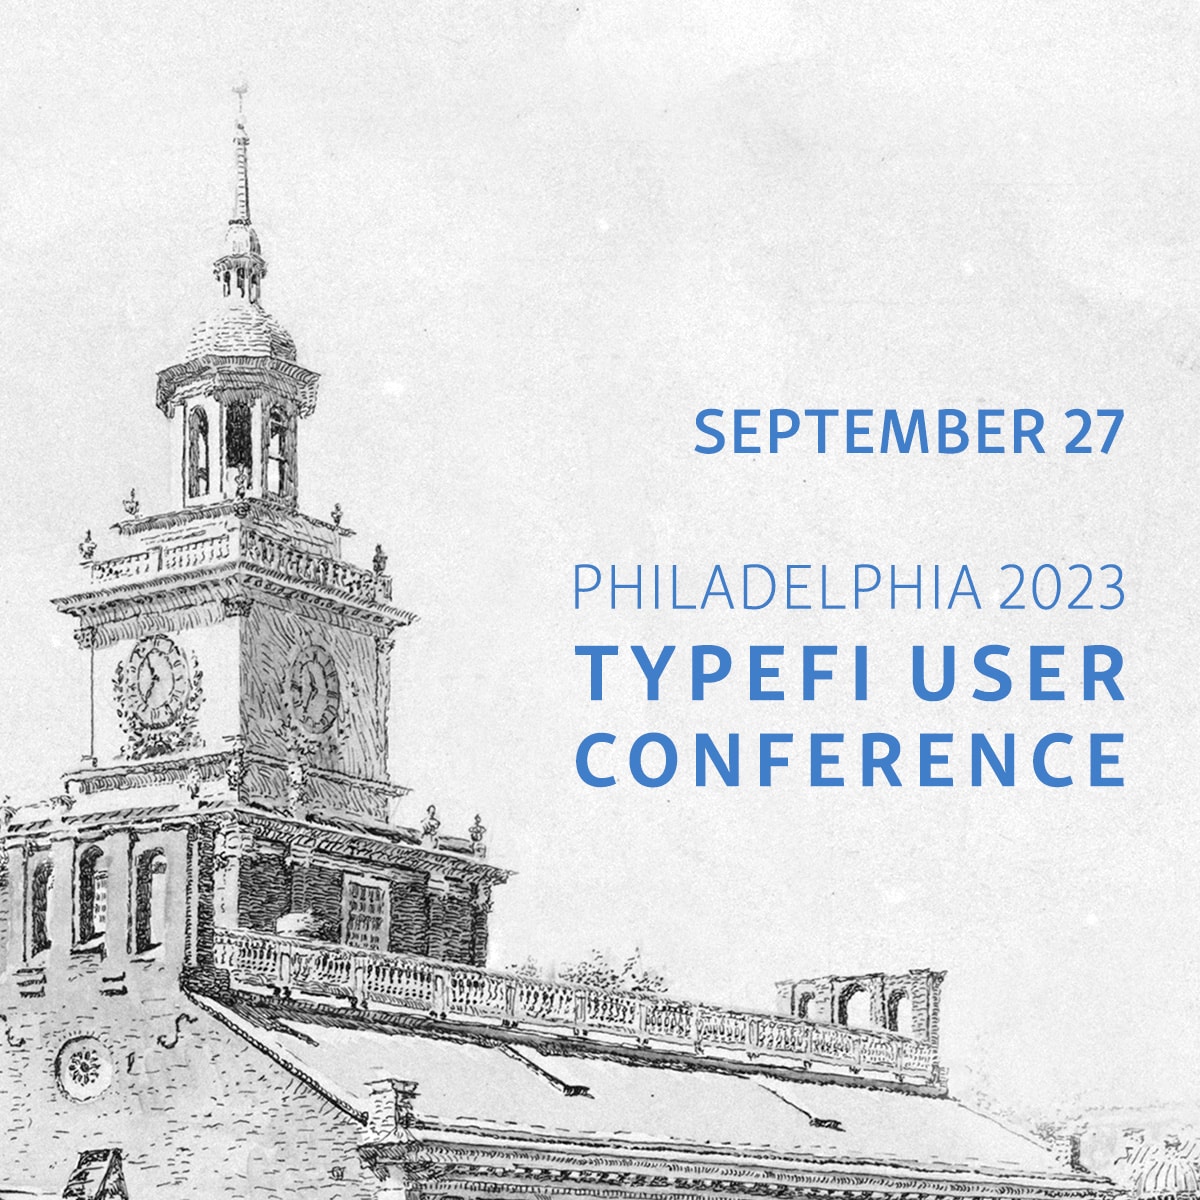 Typefi User Conference Philadelphia 2023